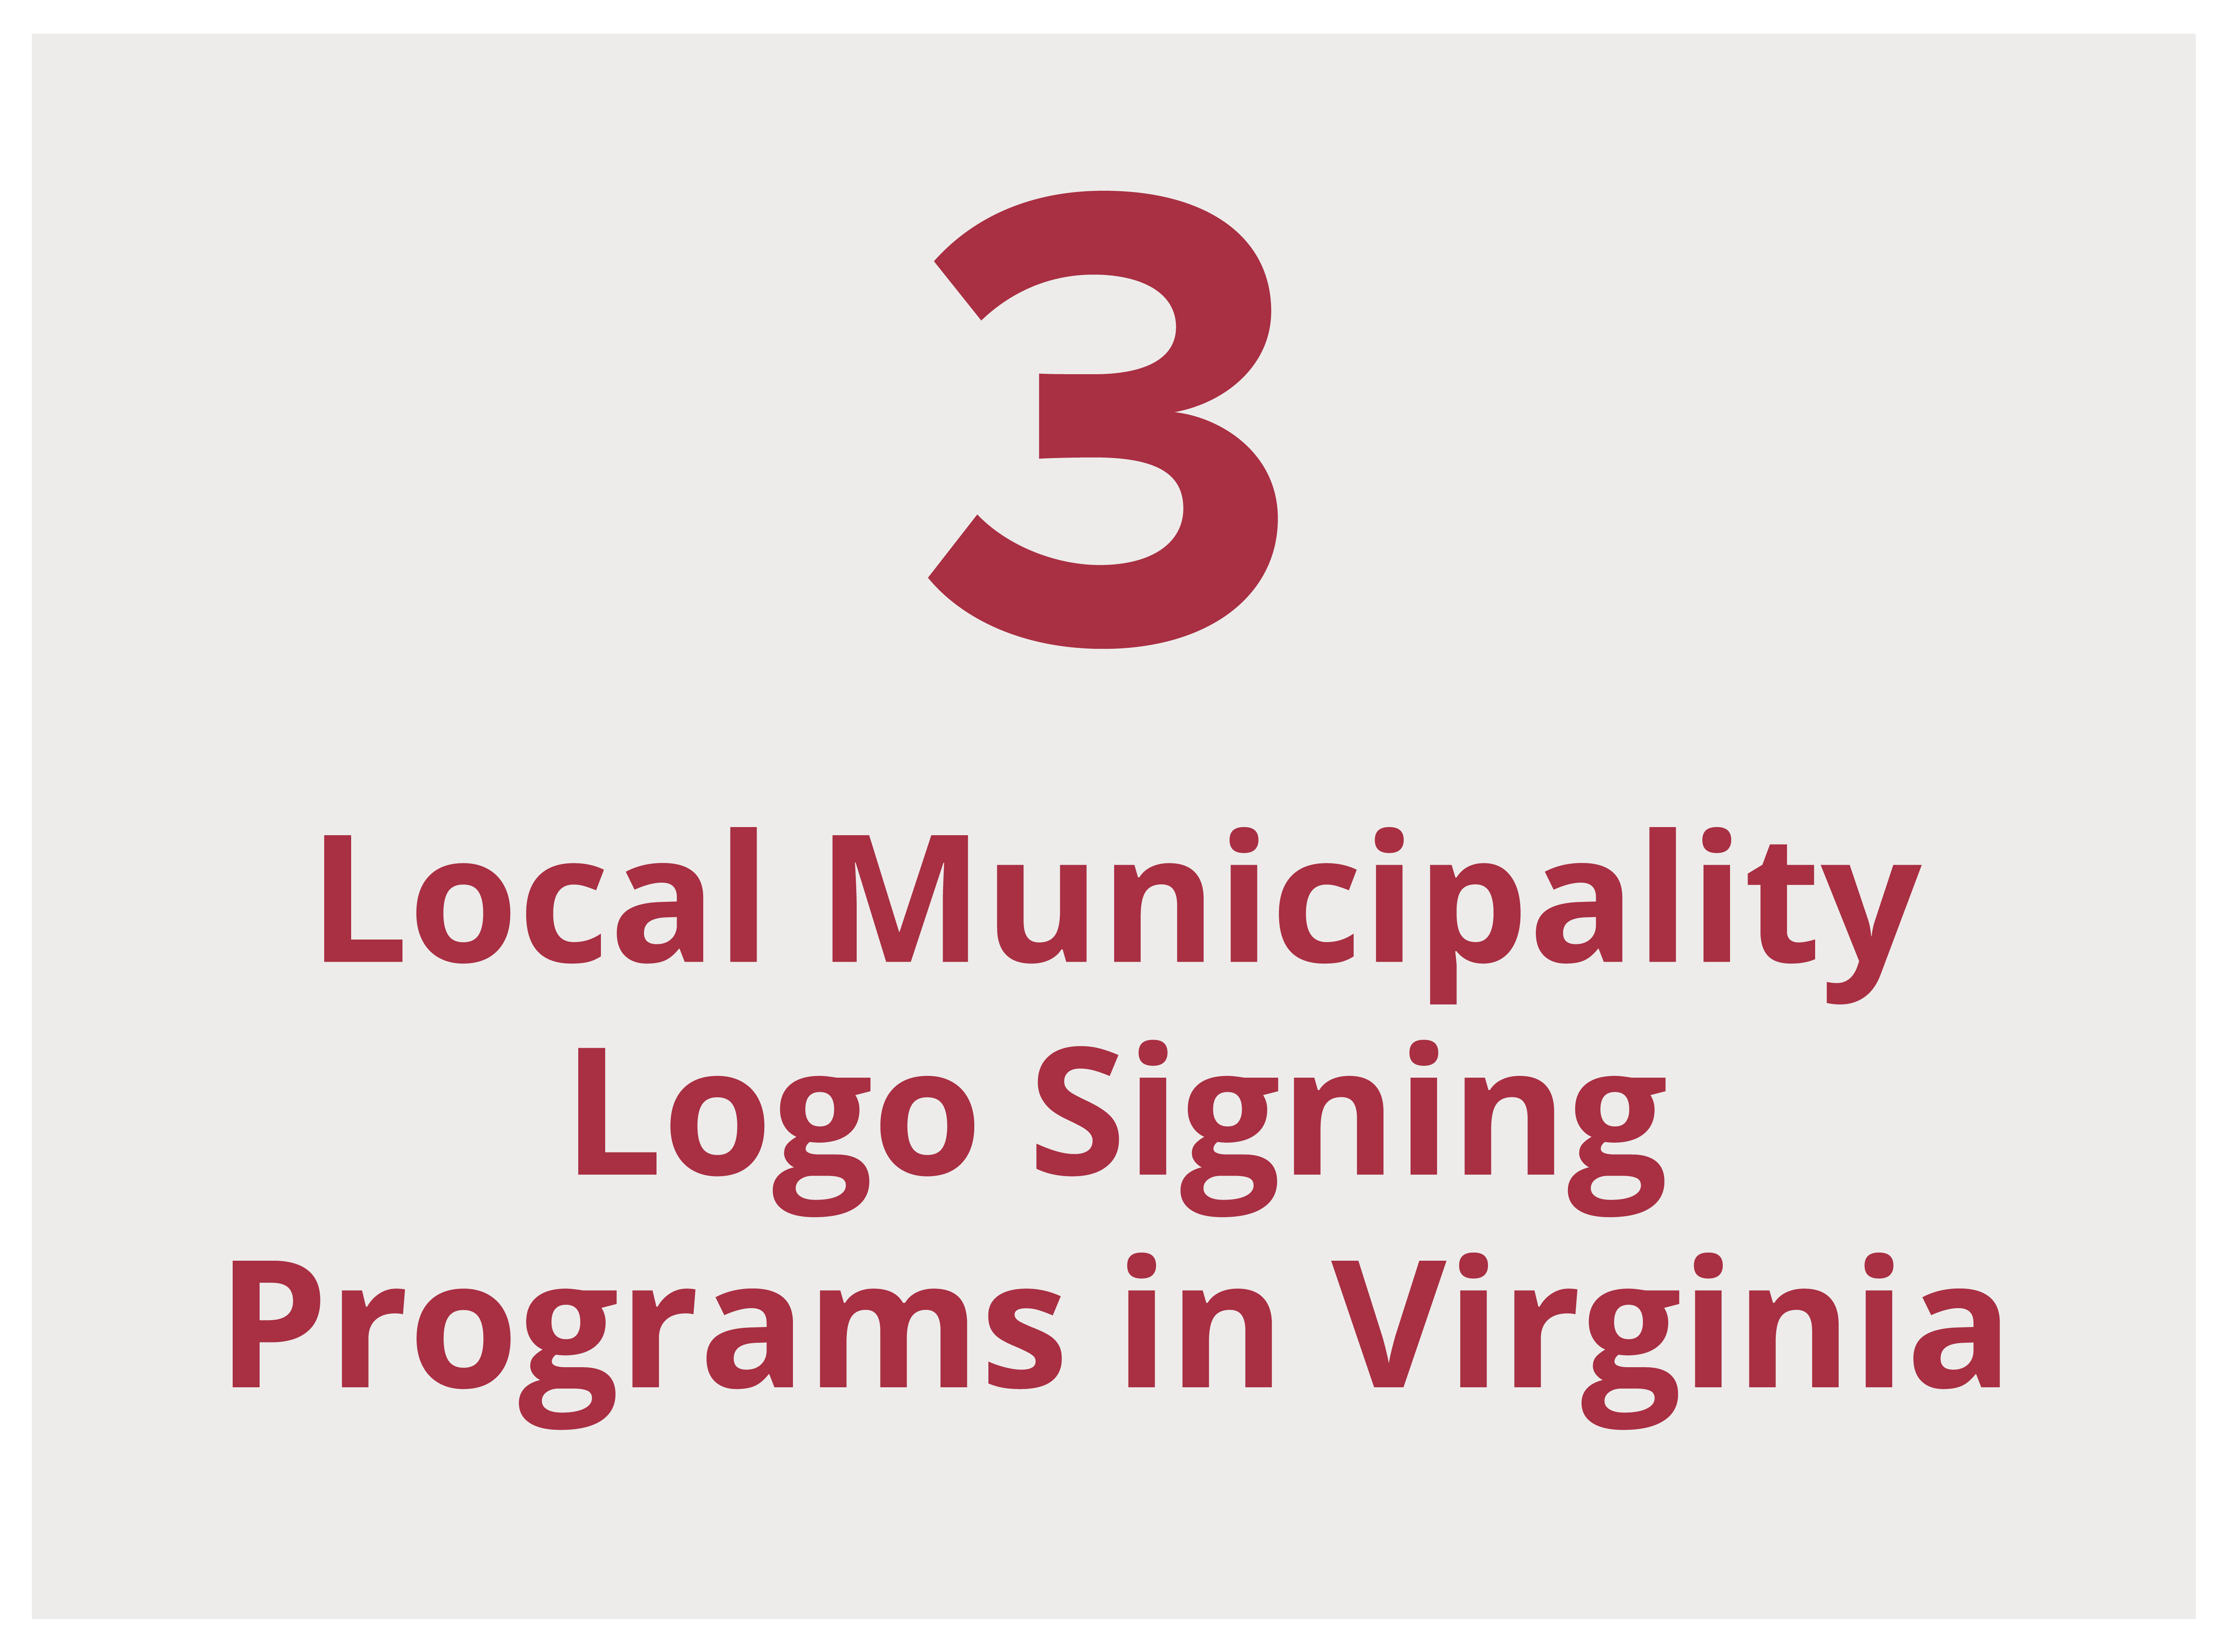 3 Local Municipality Logo Signing Programs in Virginia